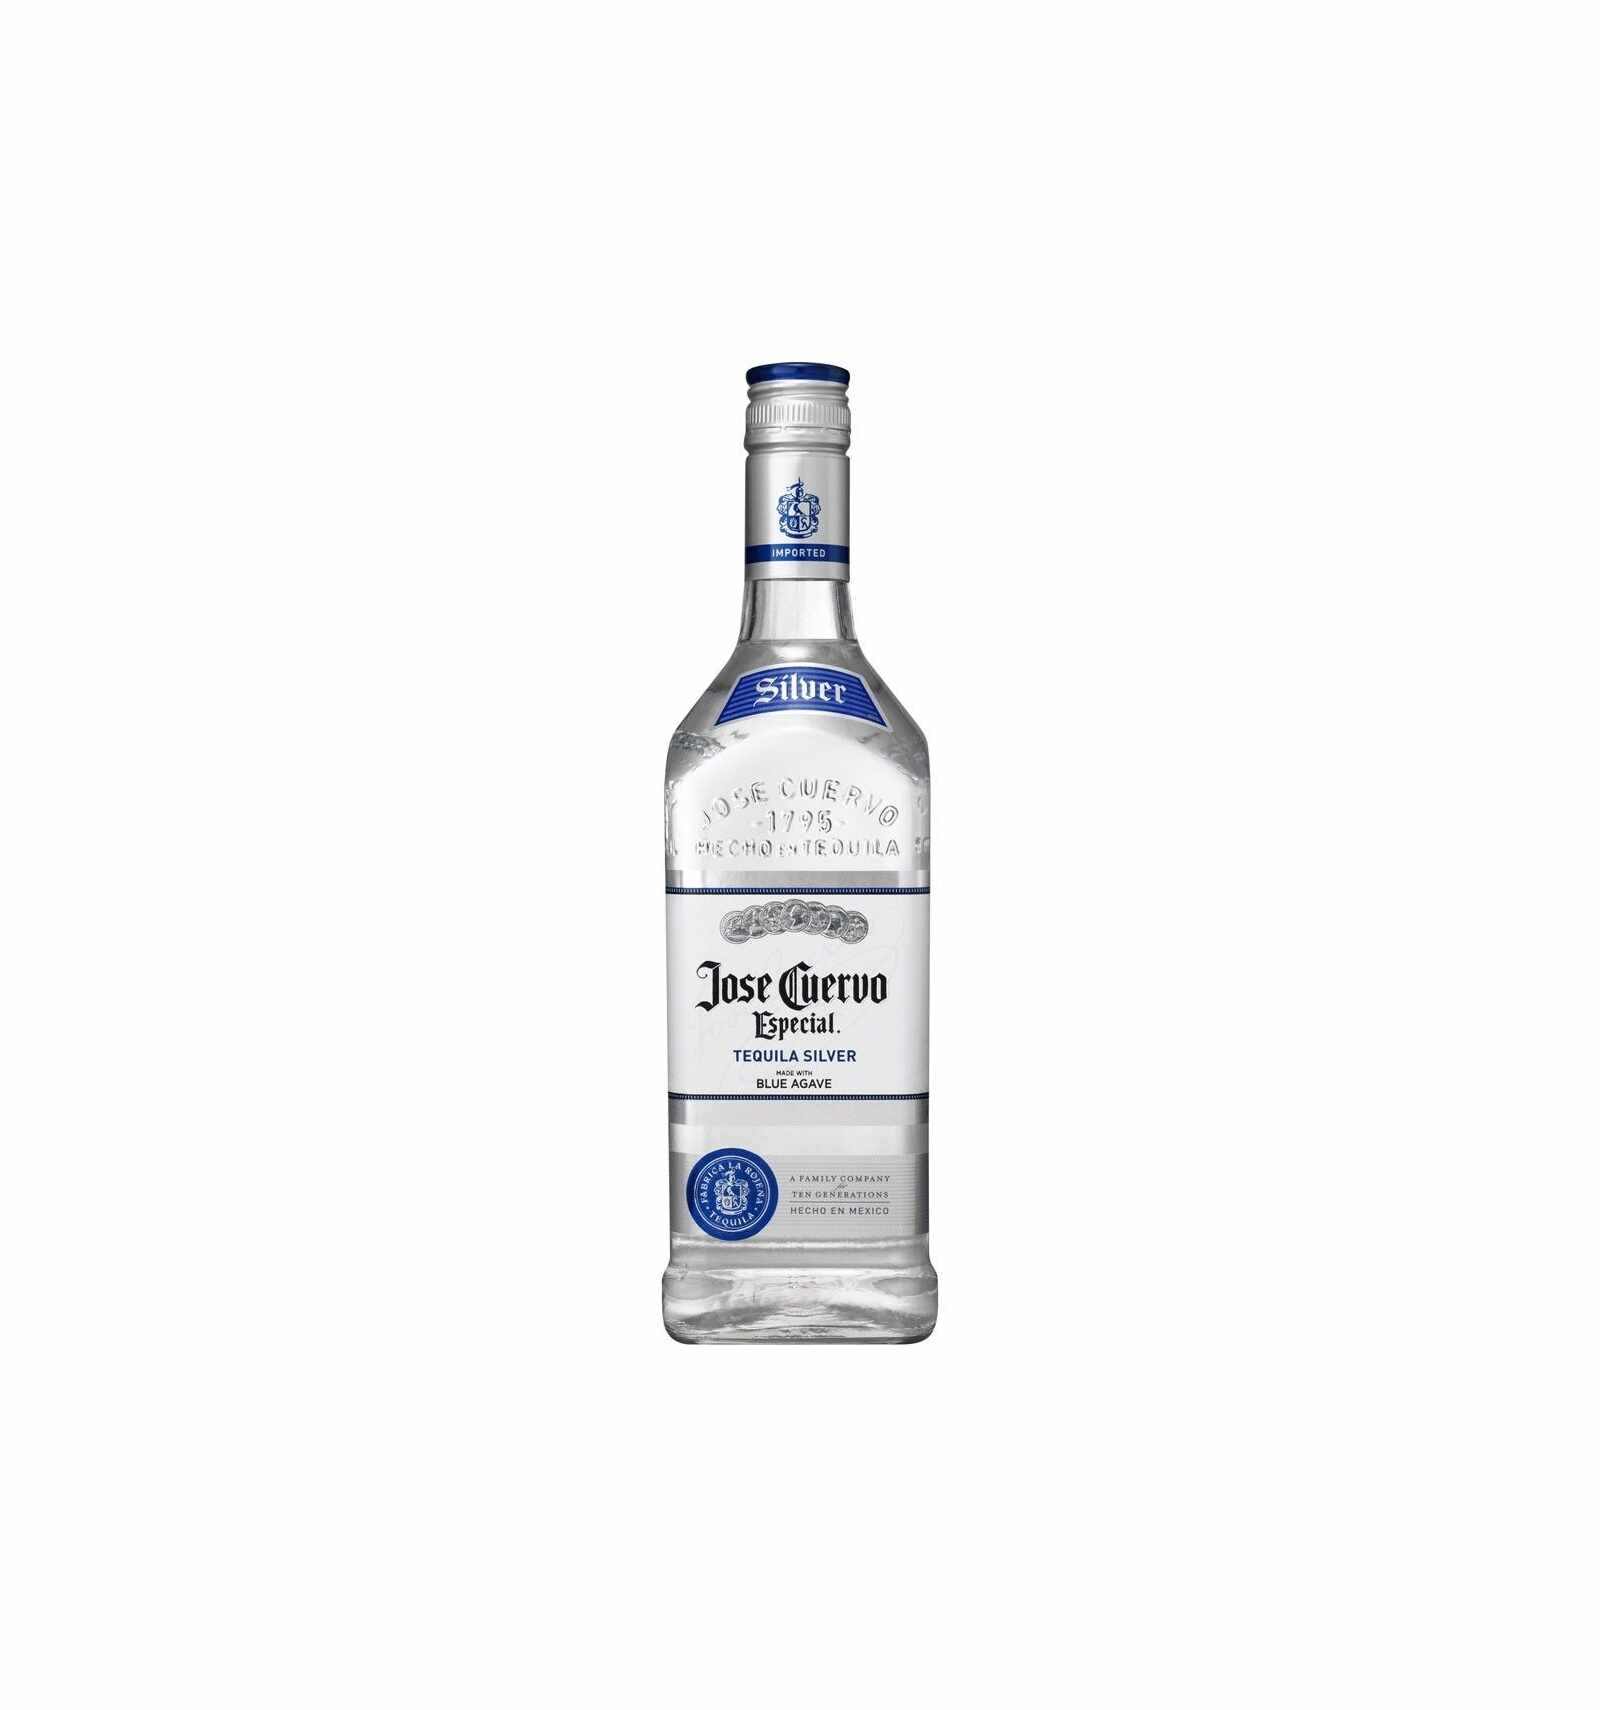 Tequila alba Jose Cuervo Especial Silver 0.7L, 38% alc., Mexic